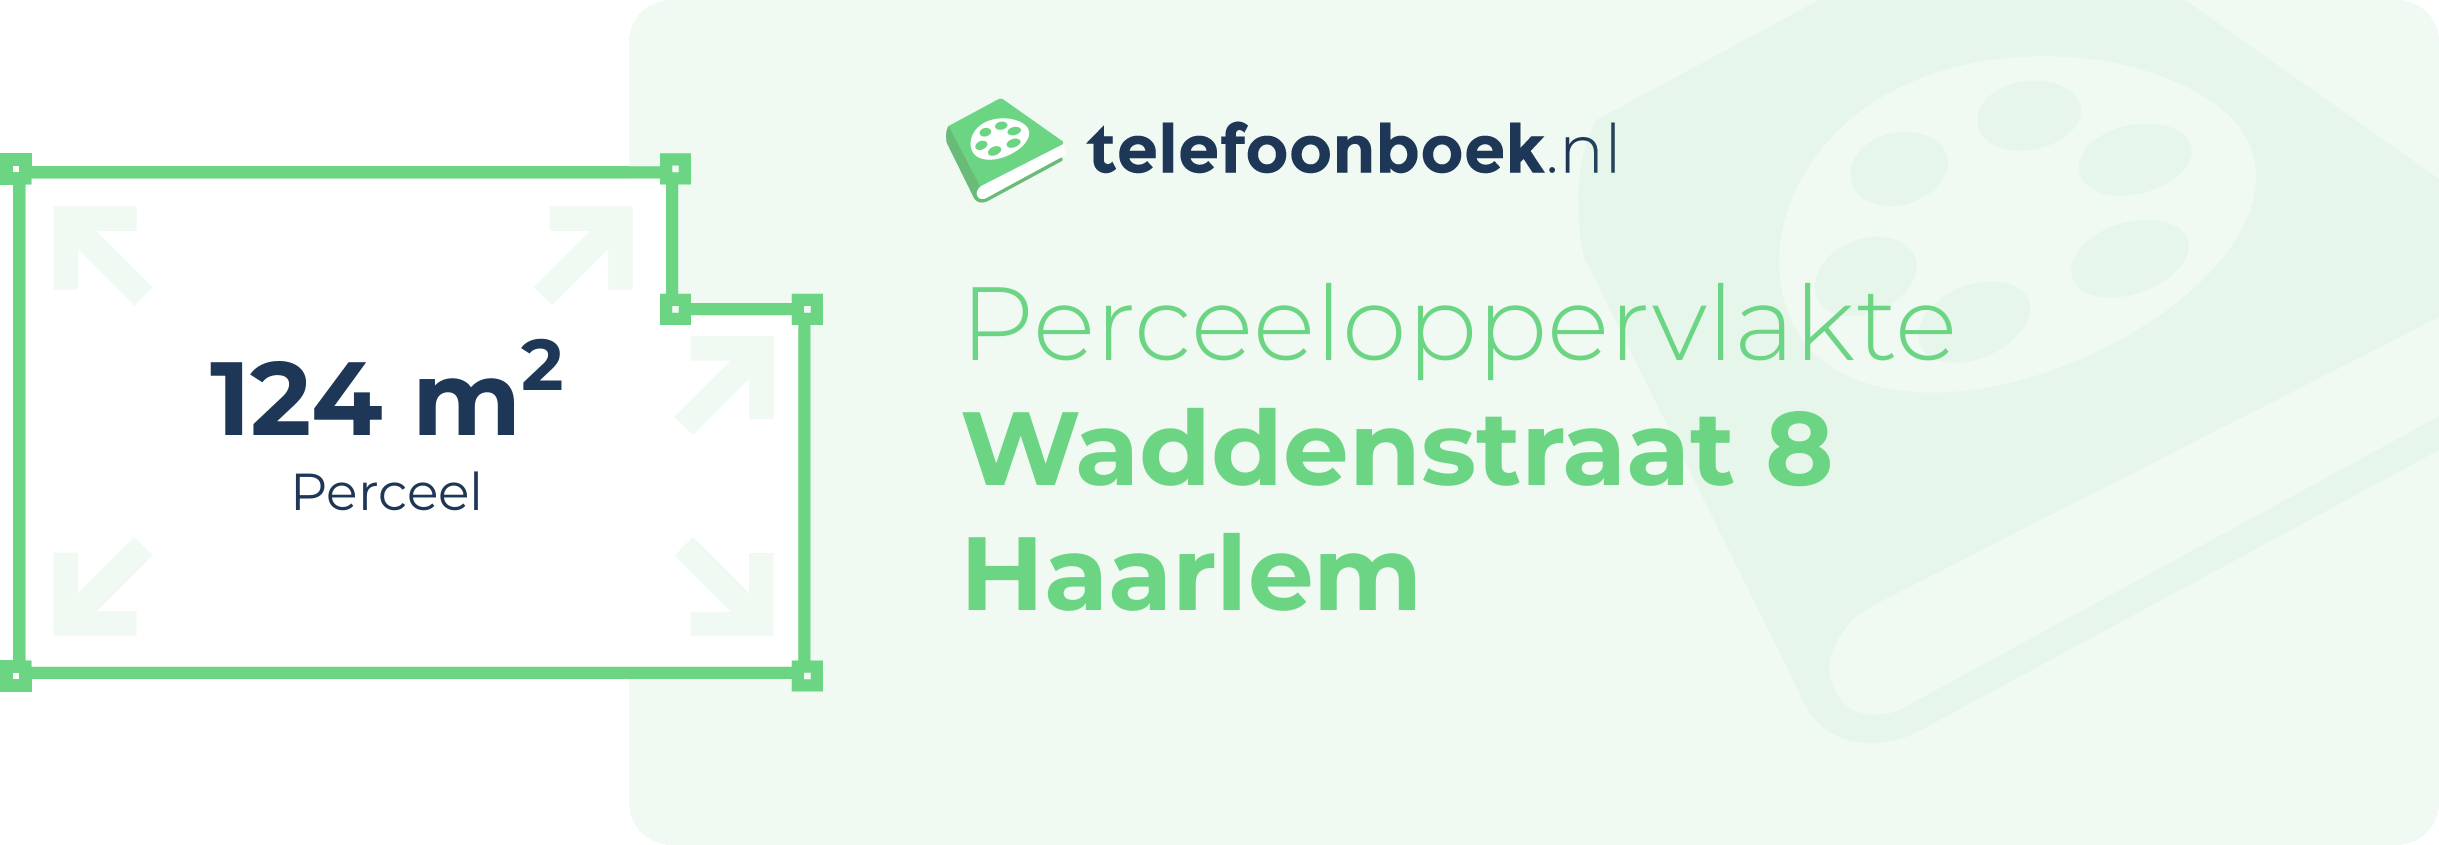 Perceeloppervlakte Waddenstraat 8 Haarlem